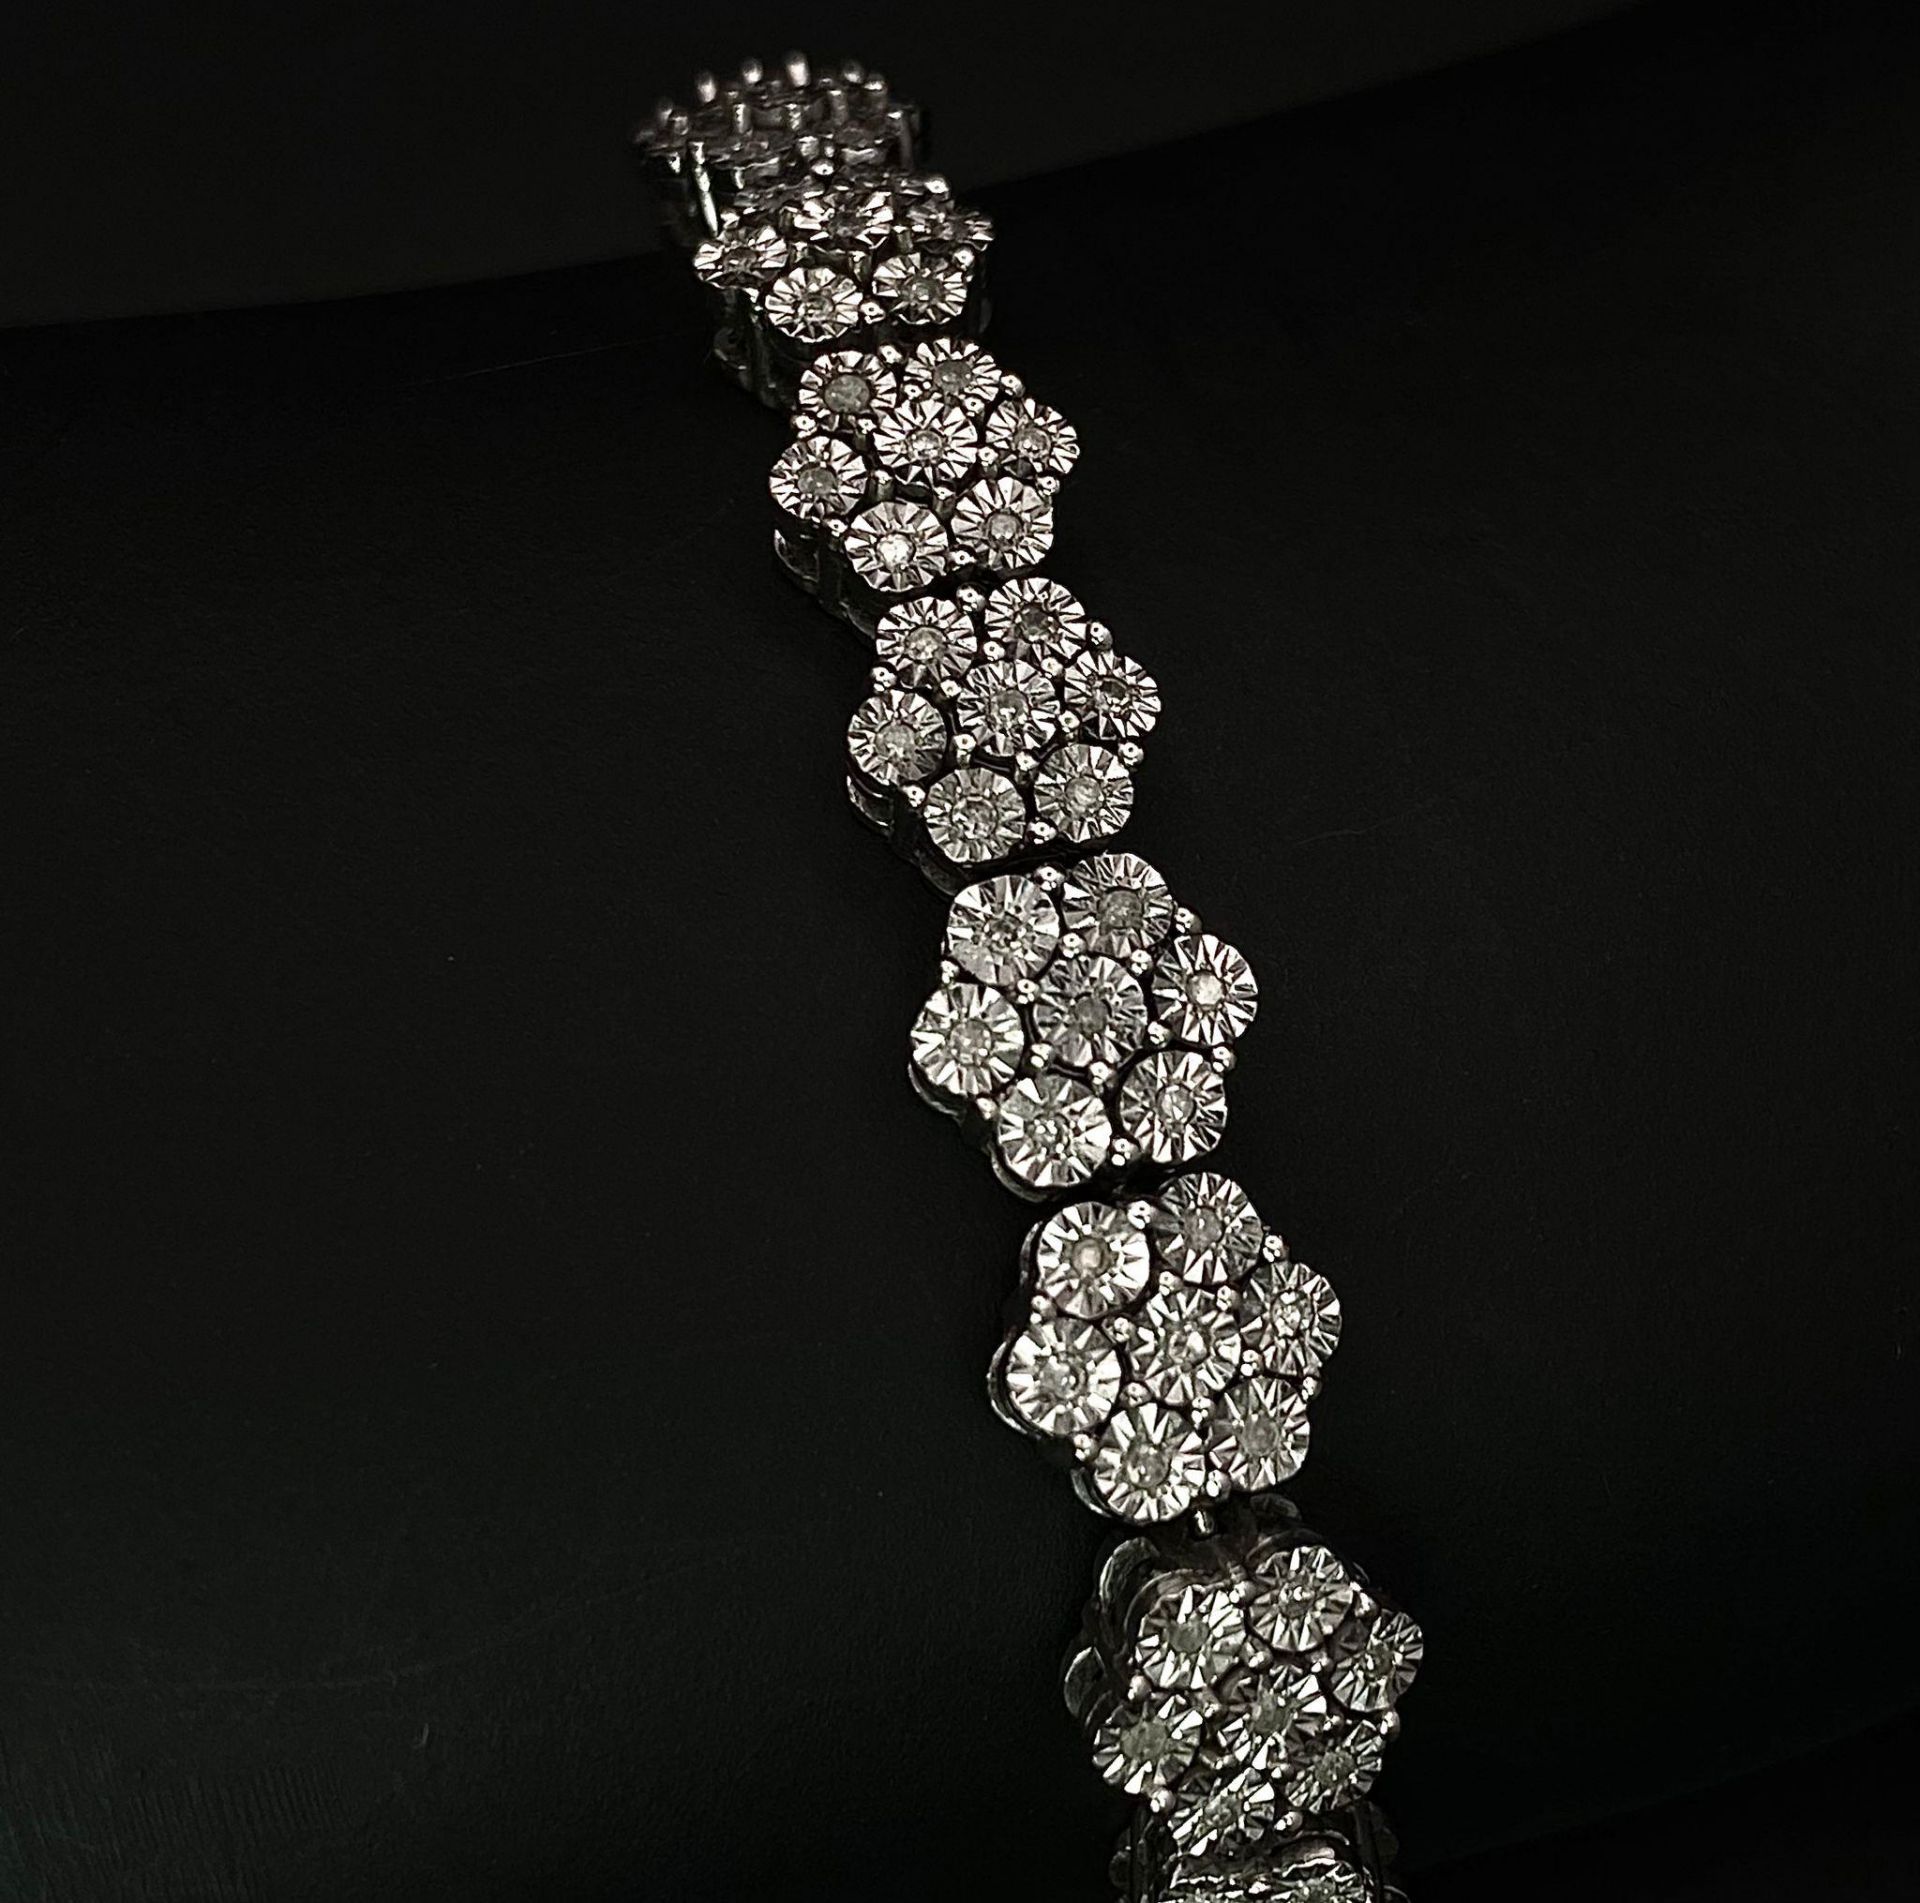 A 9K White Gold Graduated Link Diamond Tennis Bracelet. 29 links of seven small diamonds - 203